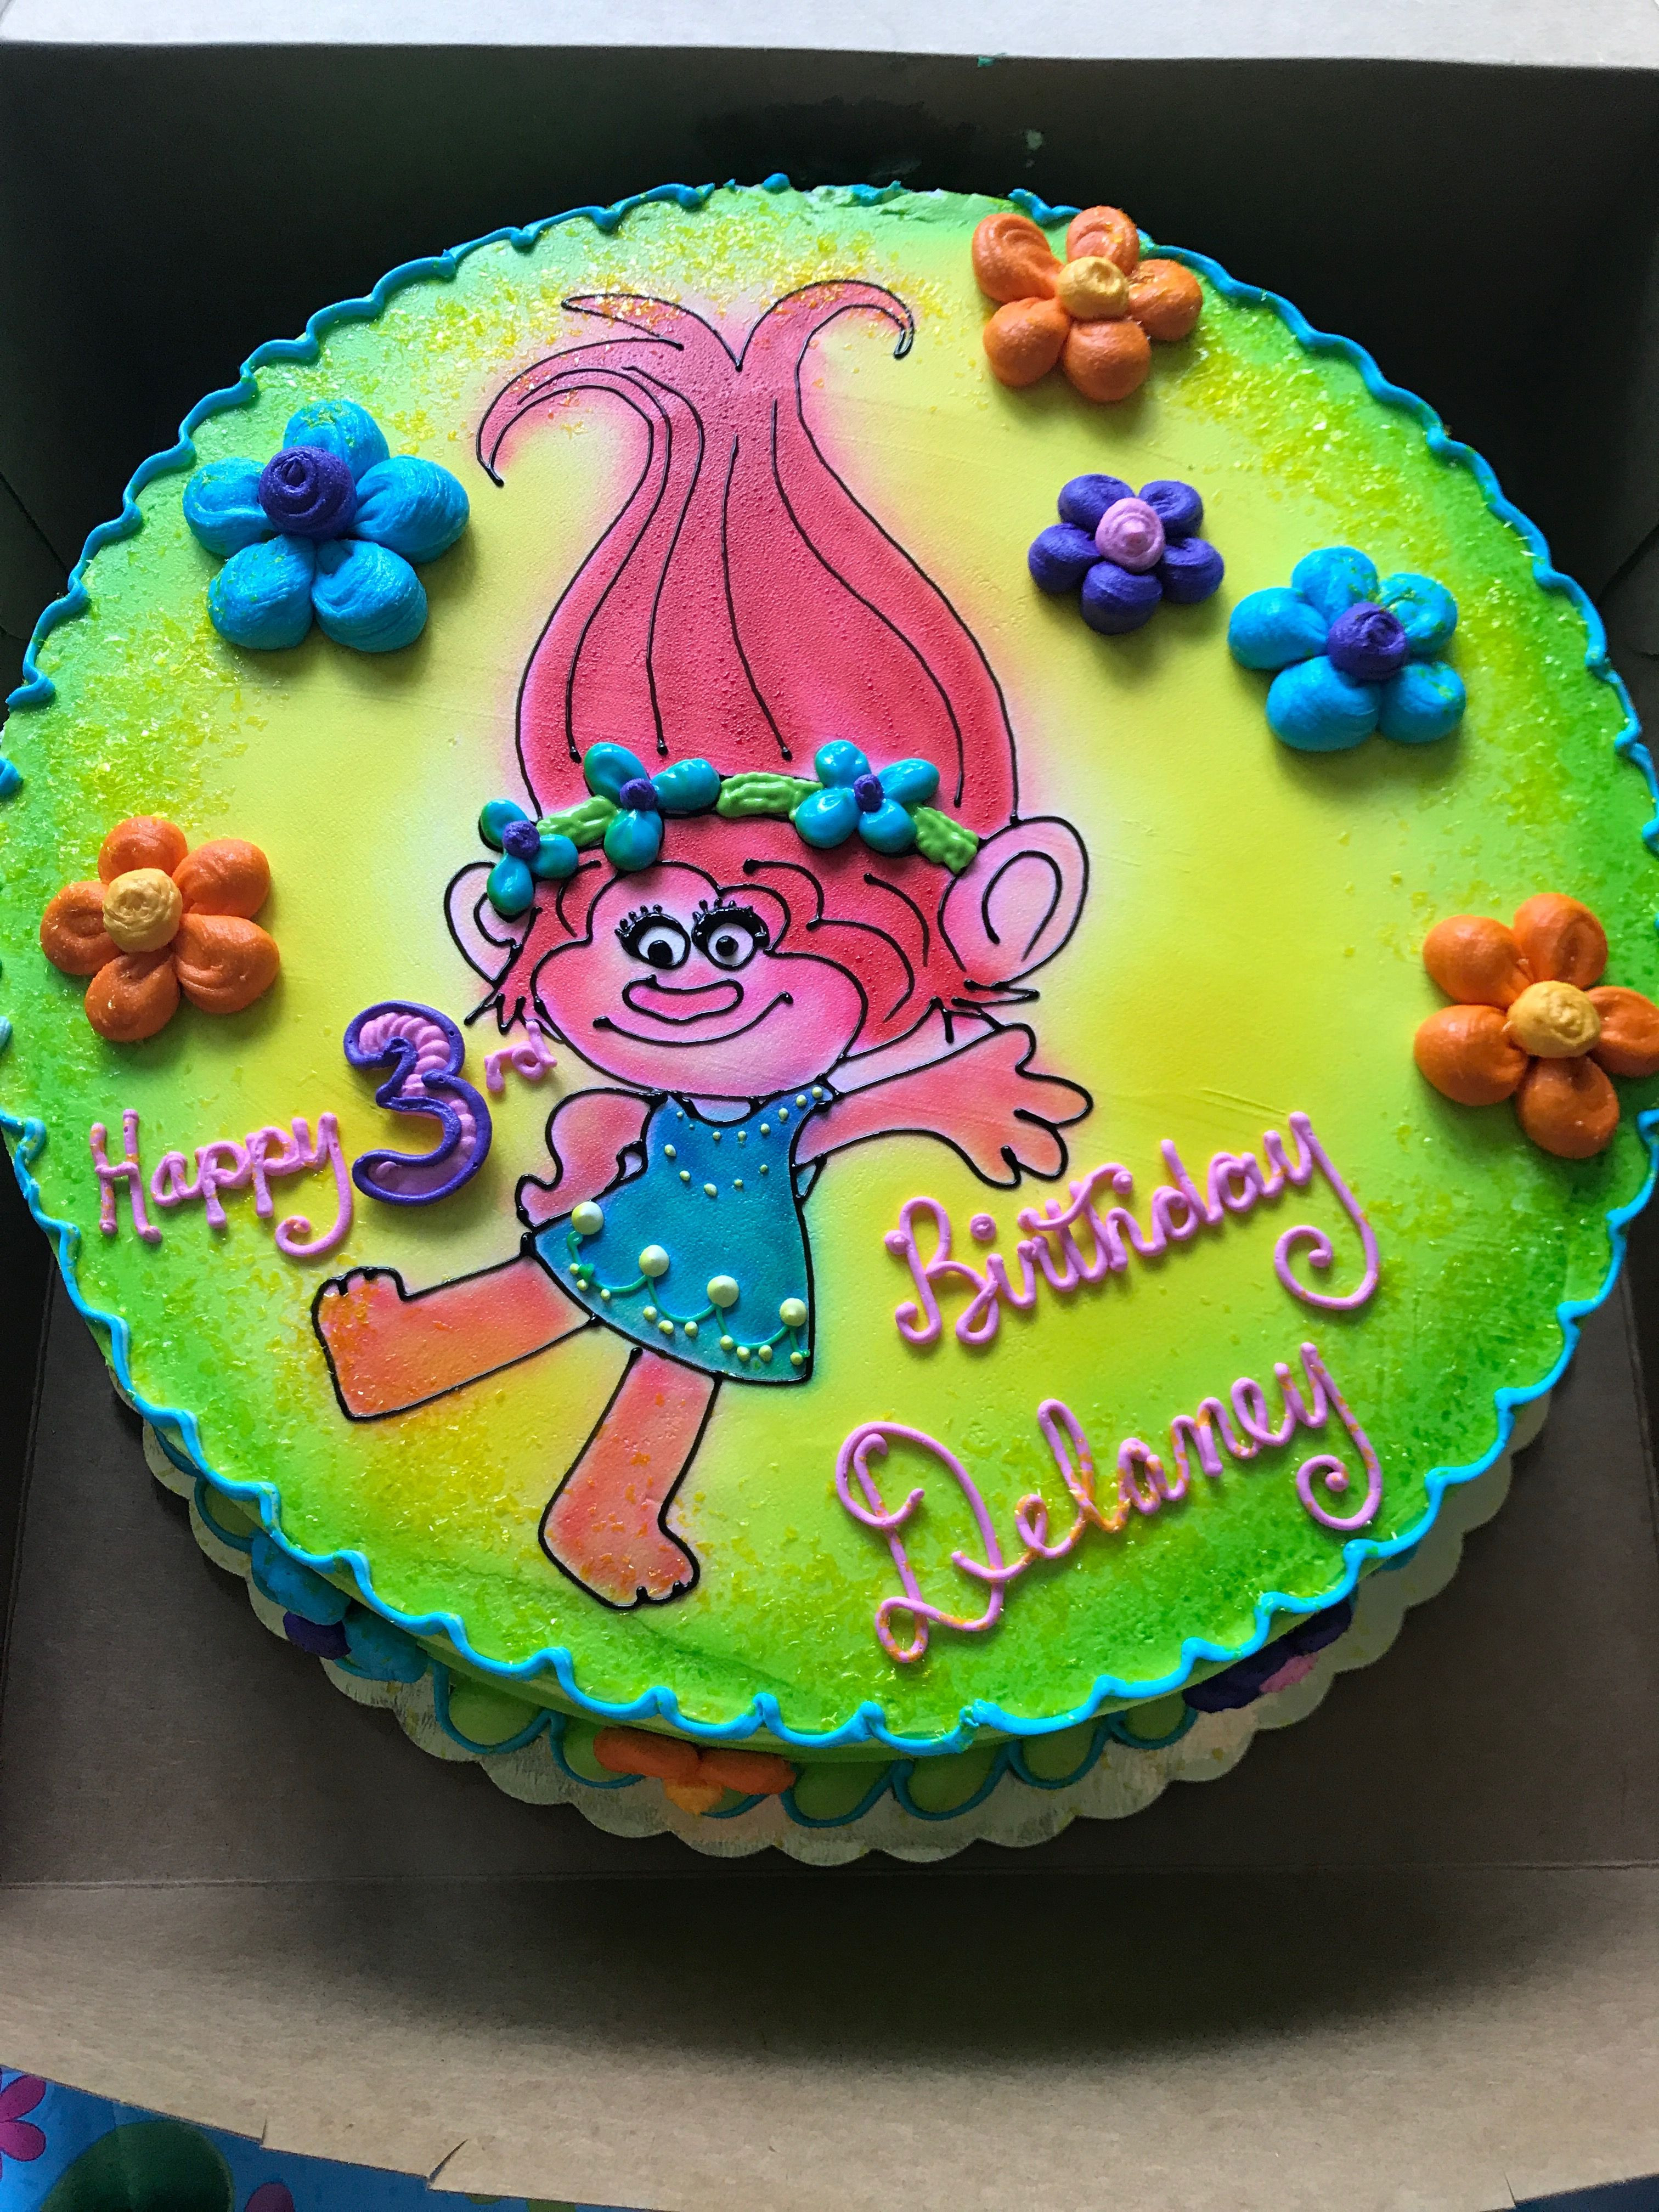 Best ideas about Poppy Birthday Cake
. Save or Pin Poppy Trolls Birthday Cake Greggory s Pastry Shop Hadley Now.